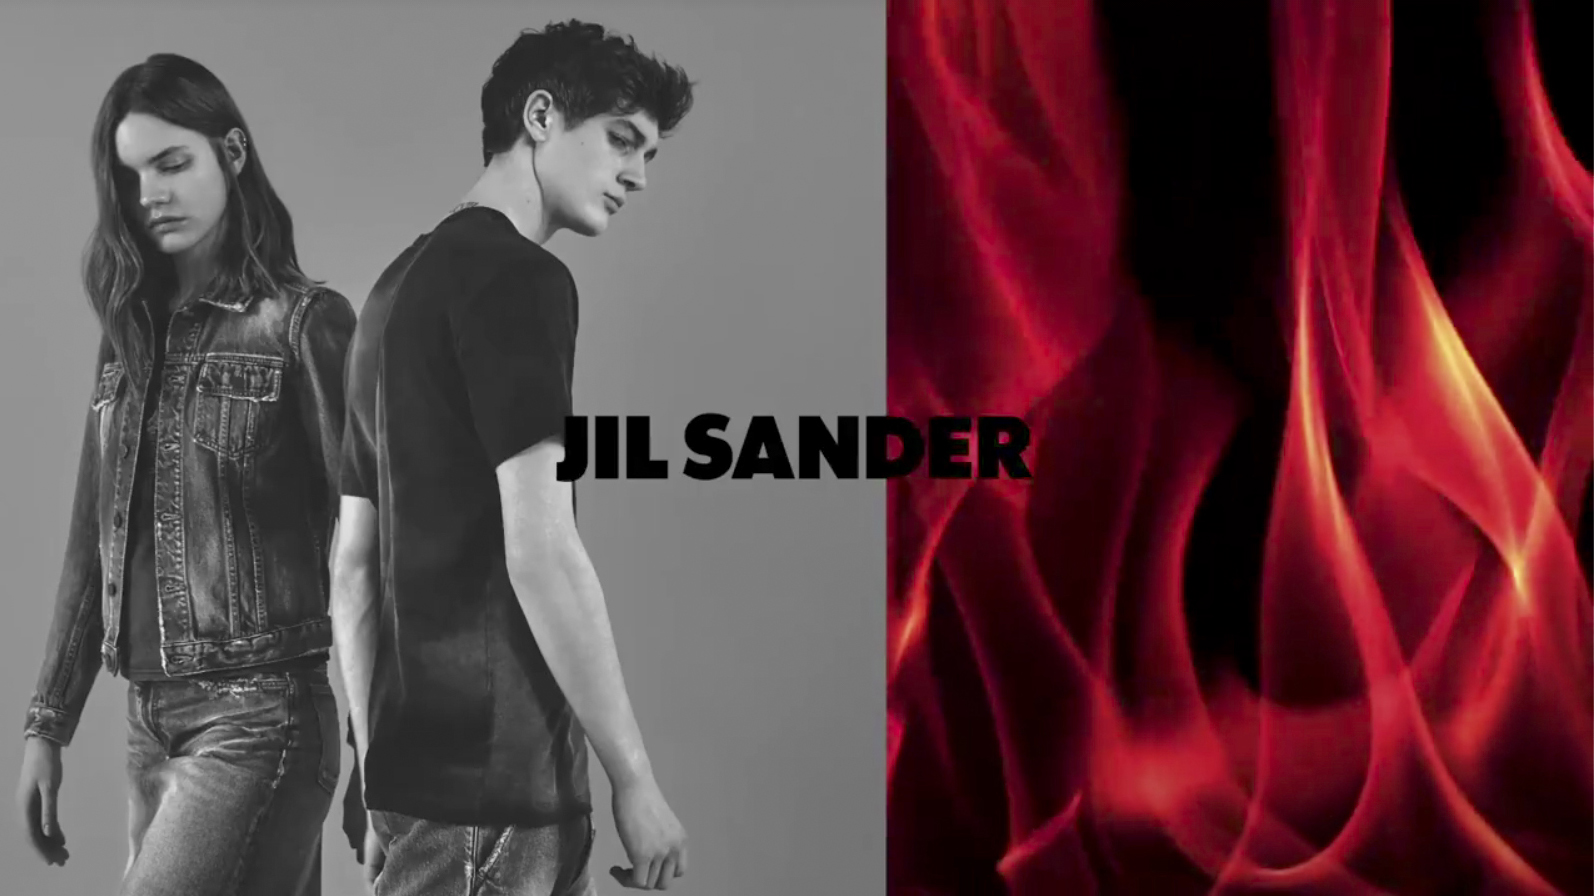 Jil Sander Adv 2016 “Fire made in Japan” | Alan Chies | Jil Sander | Numerique Retouch Photo Retouching Studio